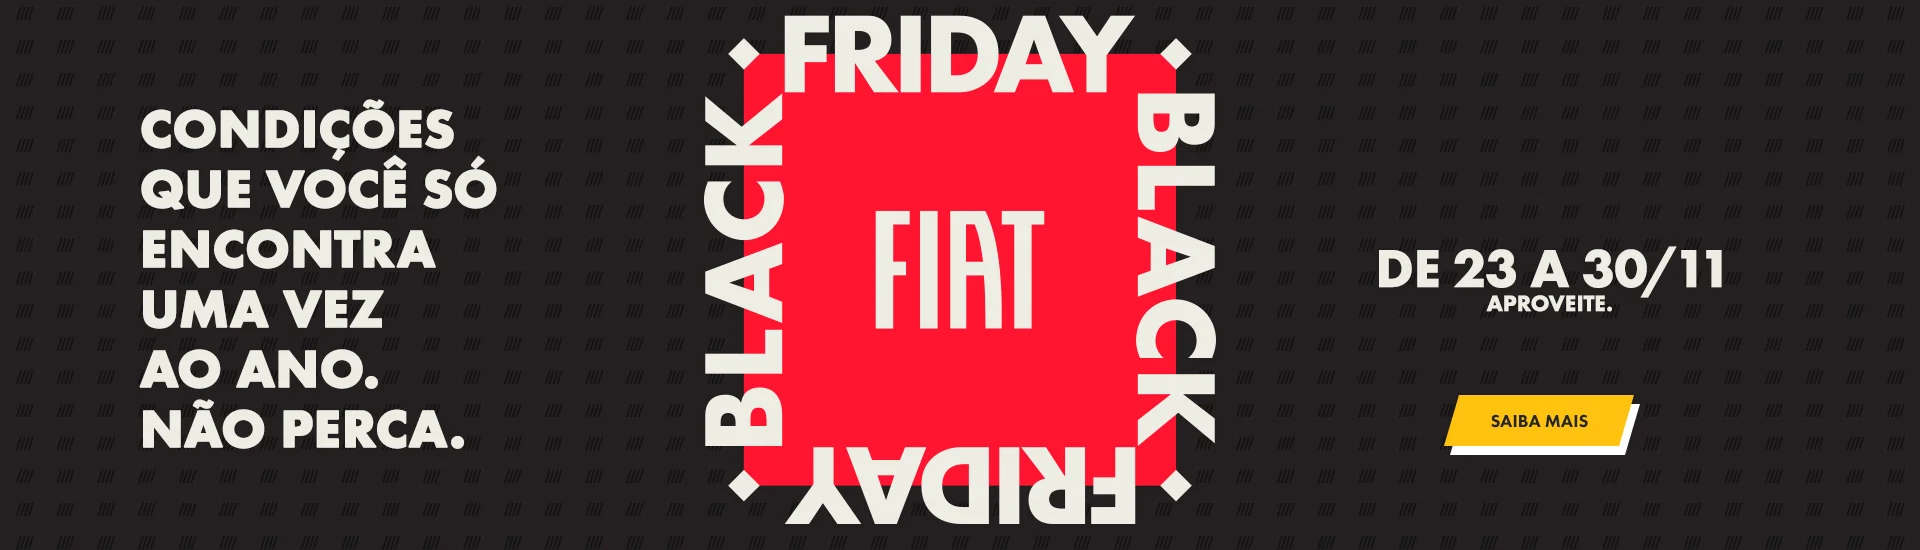 Fiat Black Friday